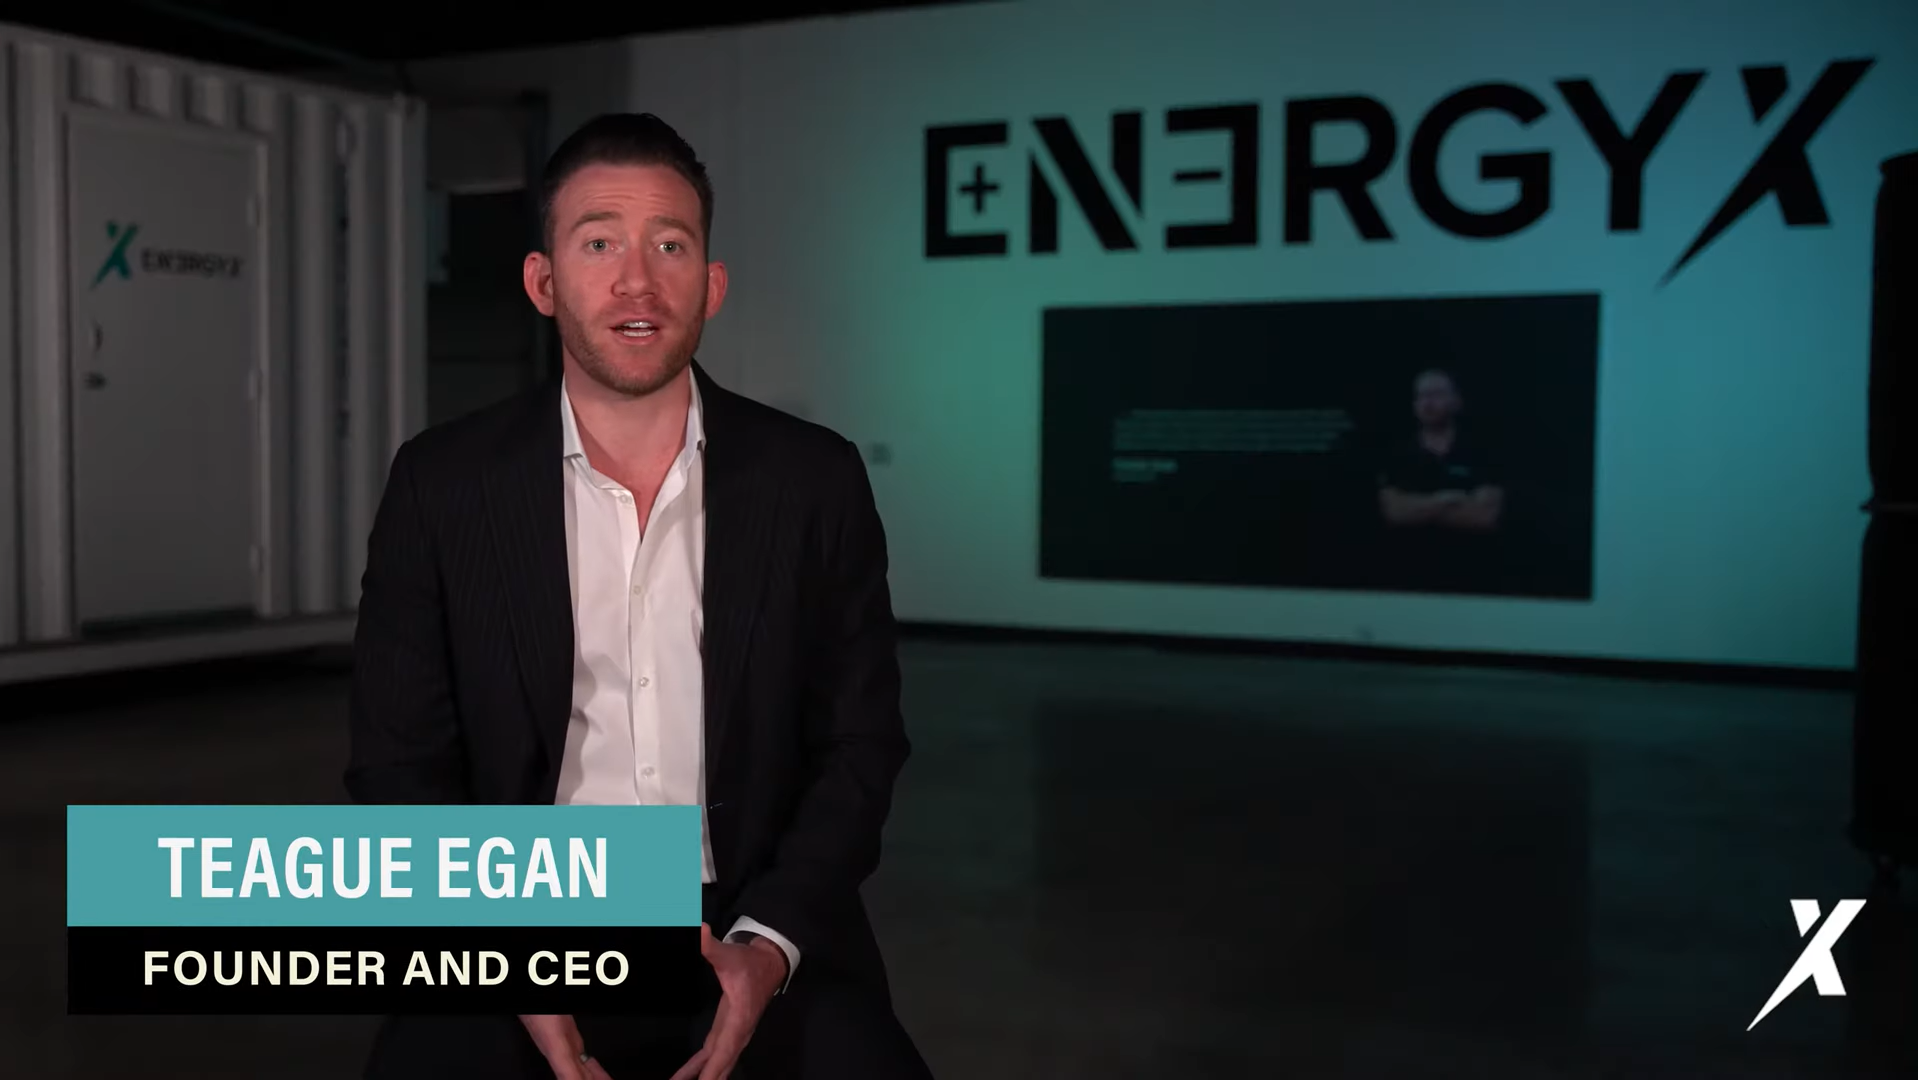 Teague Egan EnergyX